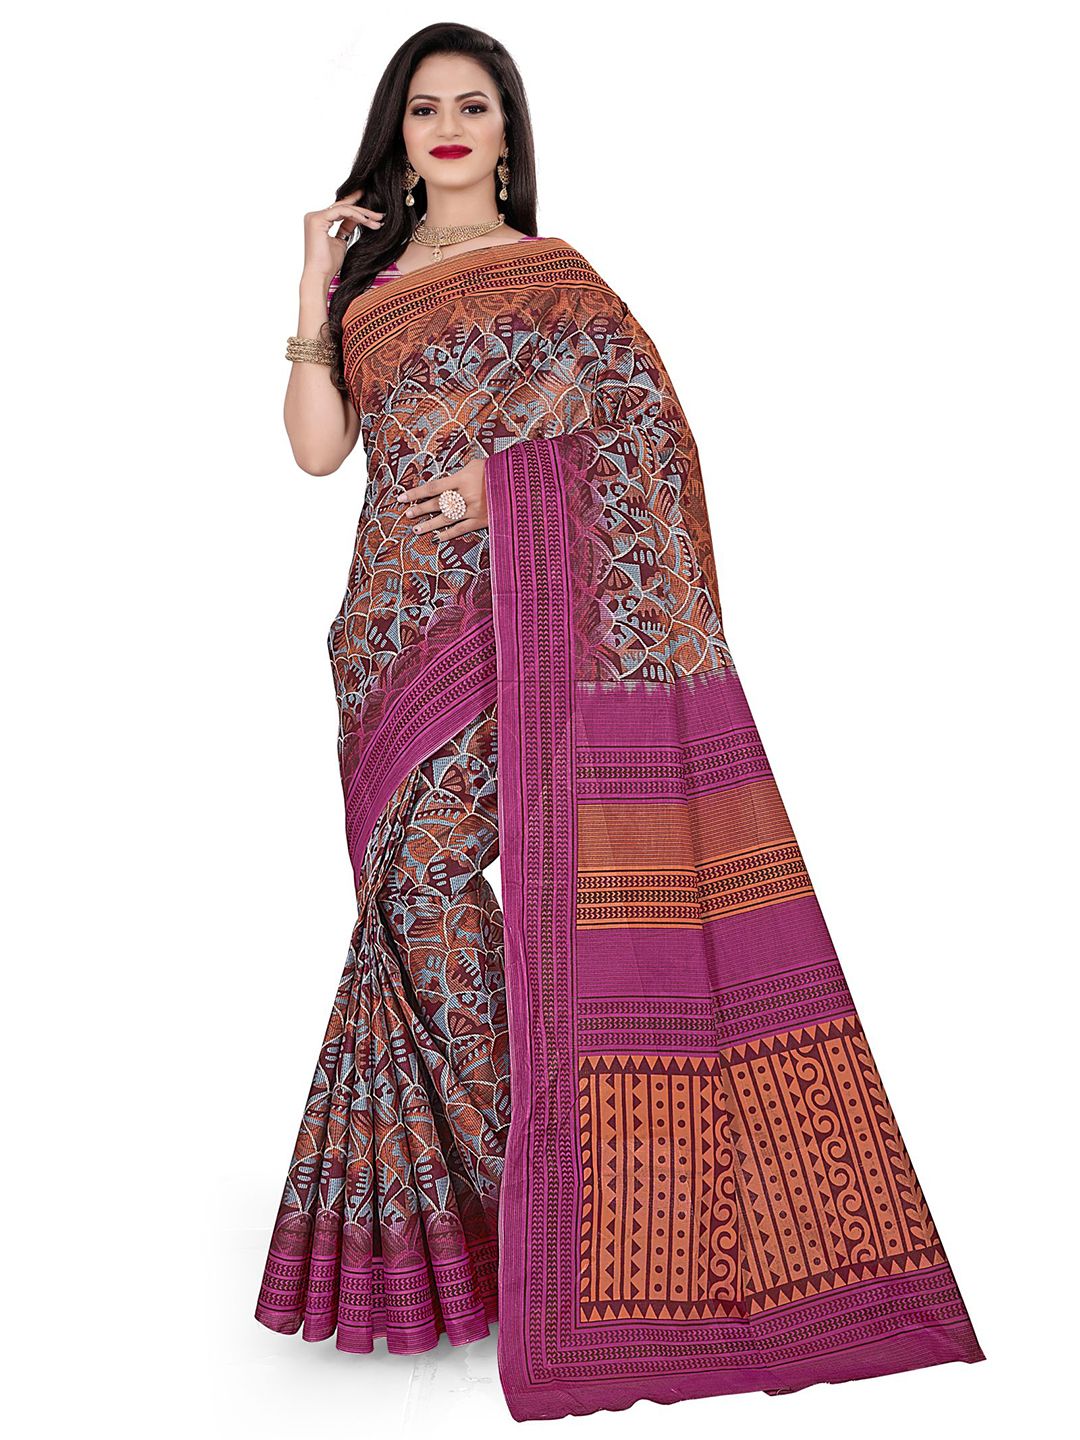 SHANVIKA Violet & Brown Pure Cotton Block Print Saree Price in India